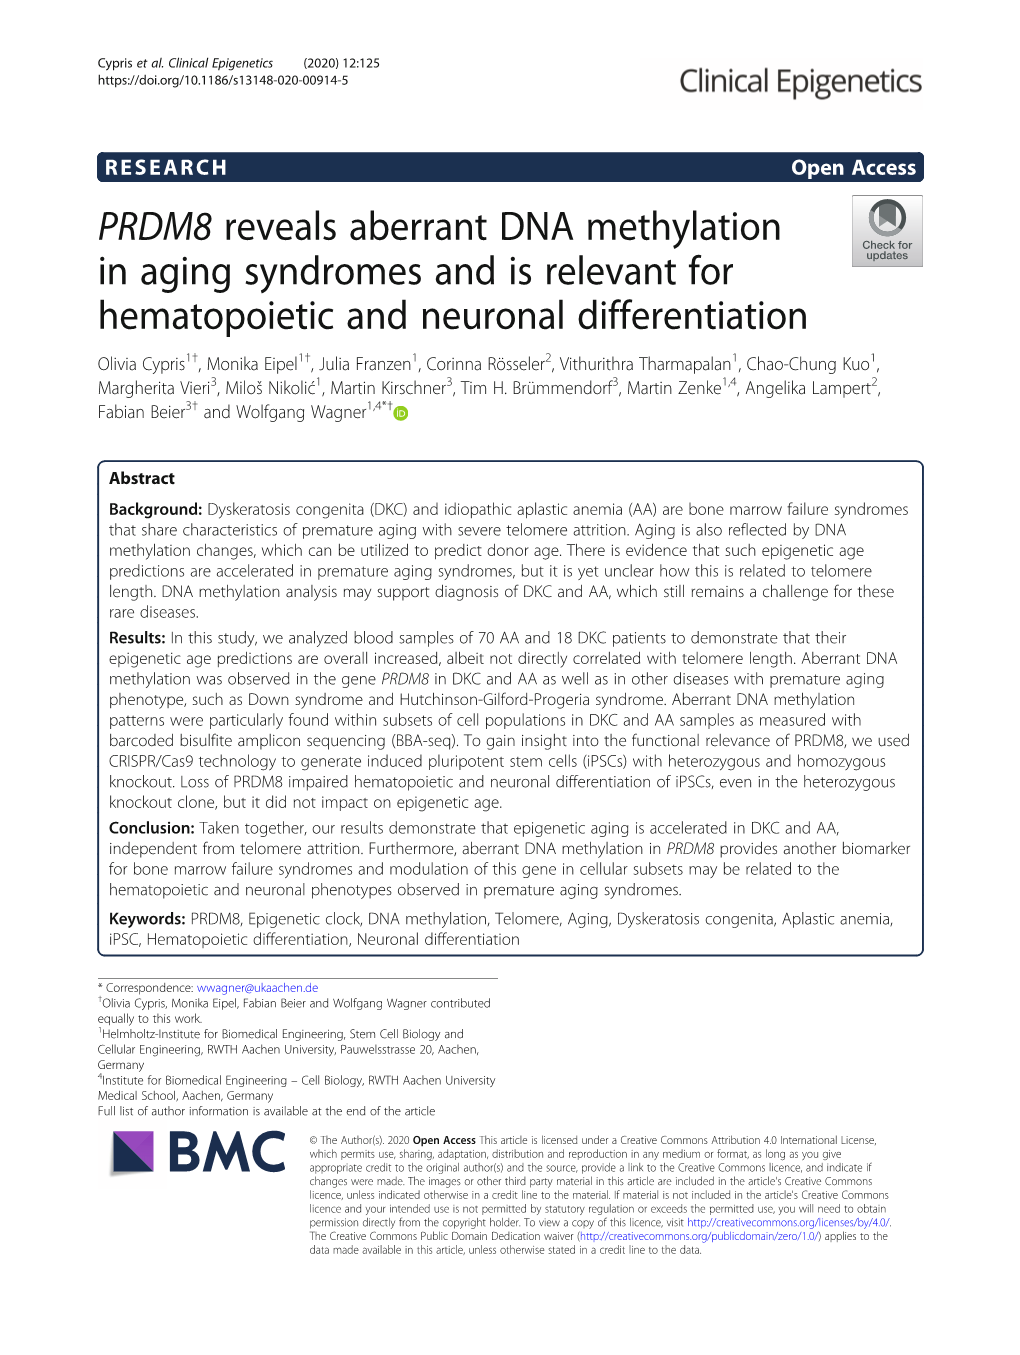 PRDM8 Reveals Aberrant DNA Methylation in Aging Syndromes